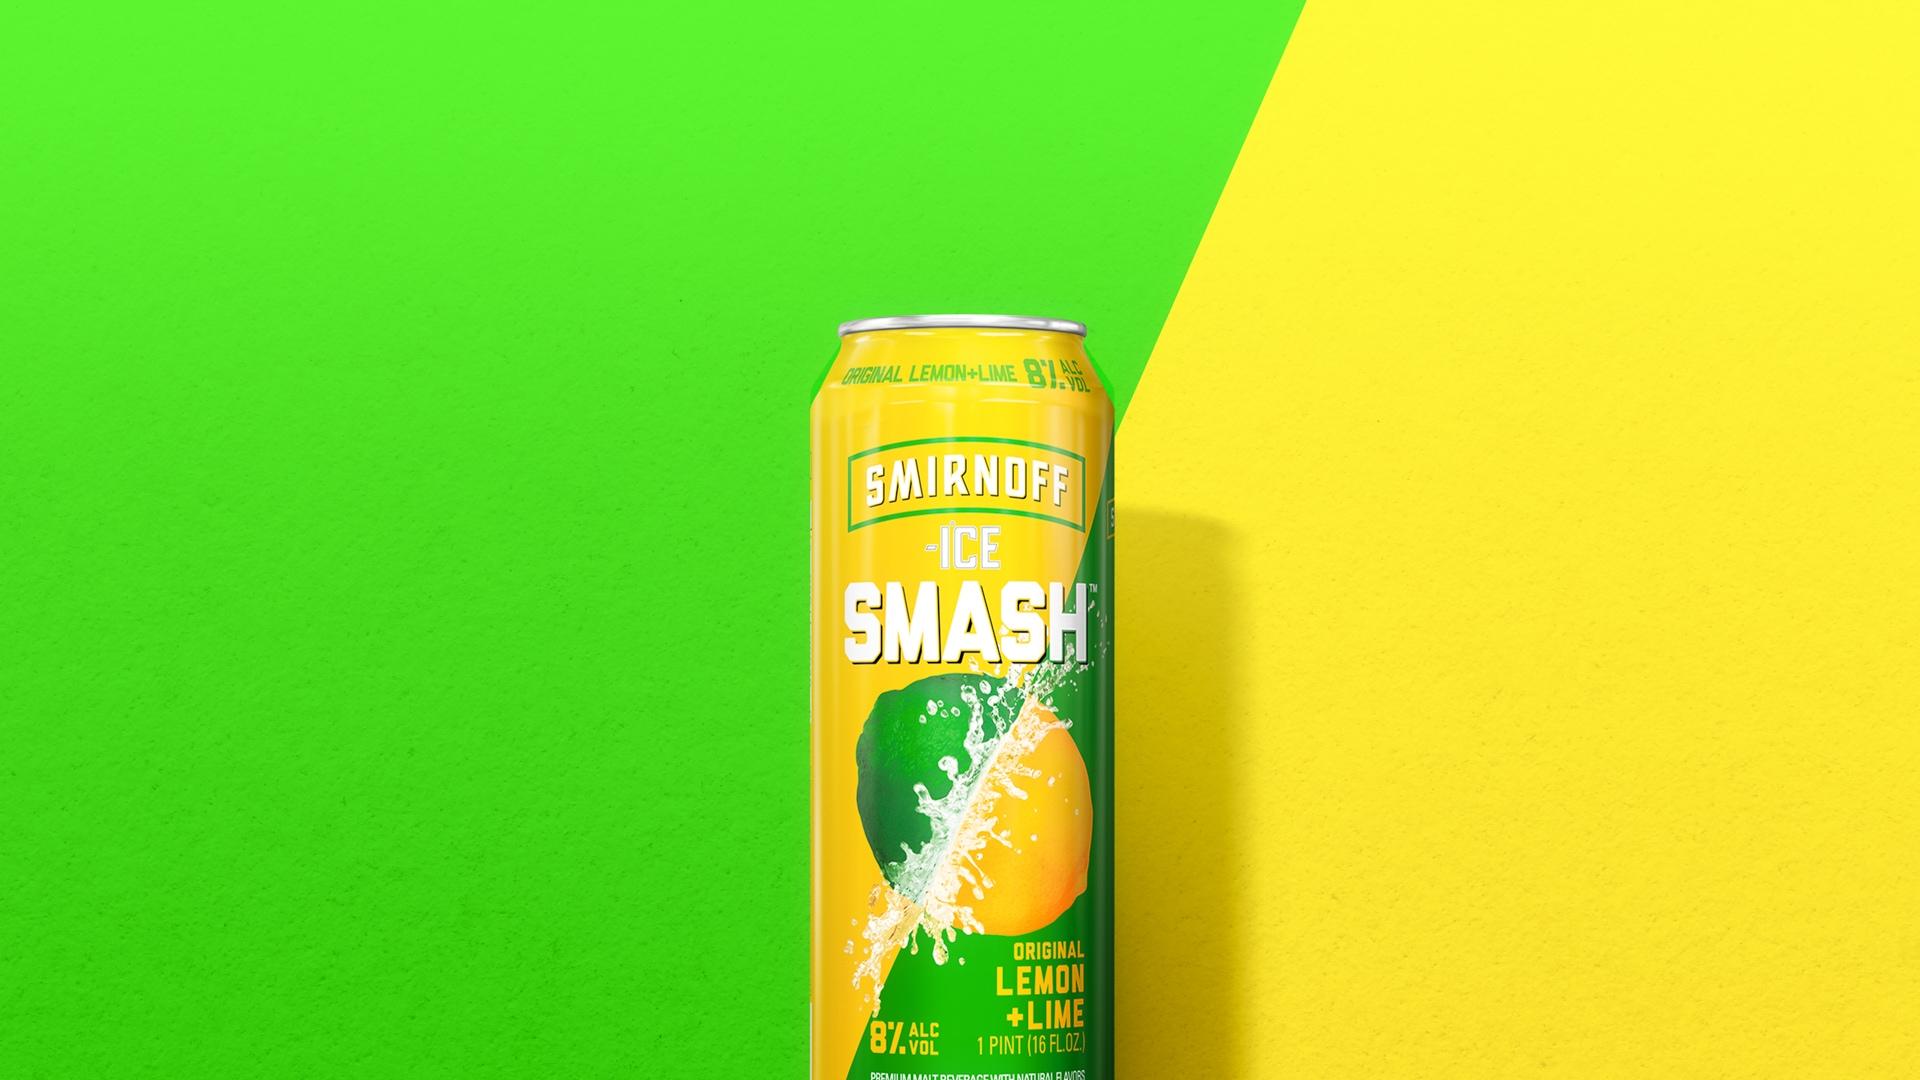 Smirnoff Ice Smash Lemon + Lime on a two tone background